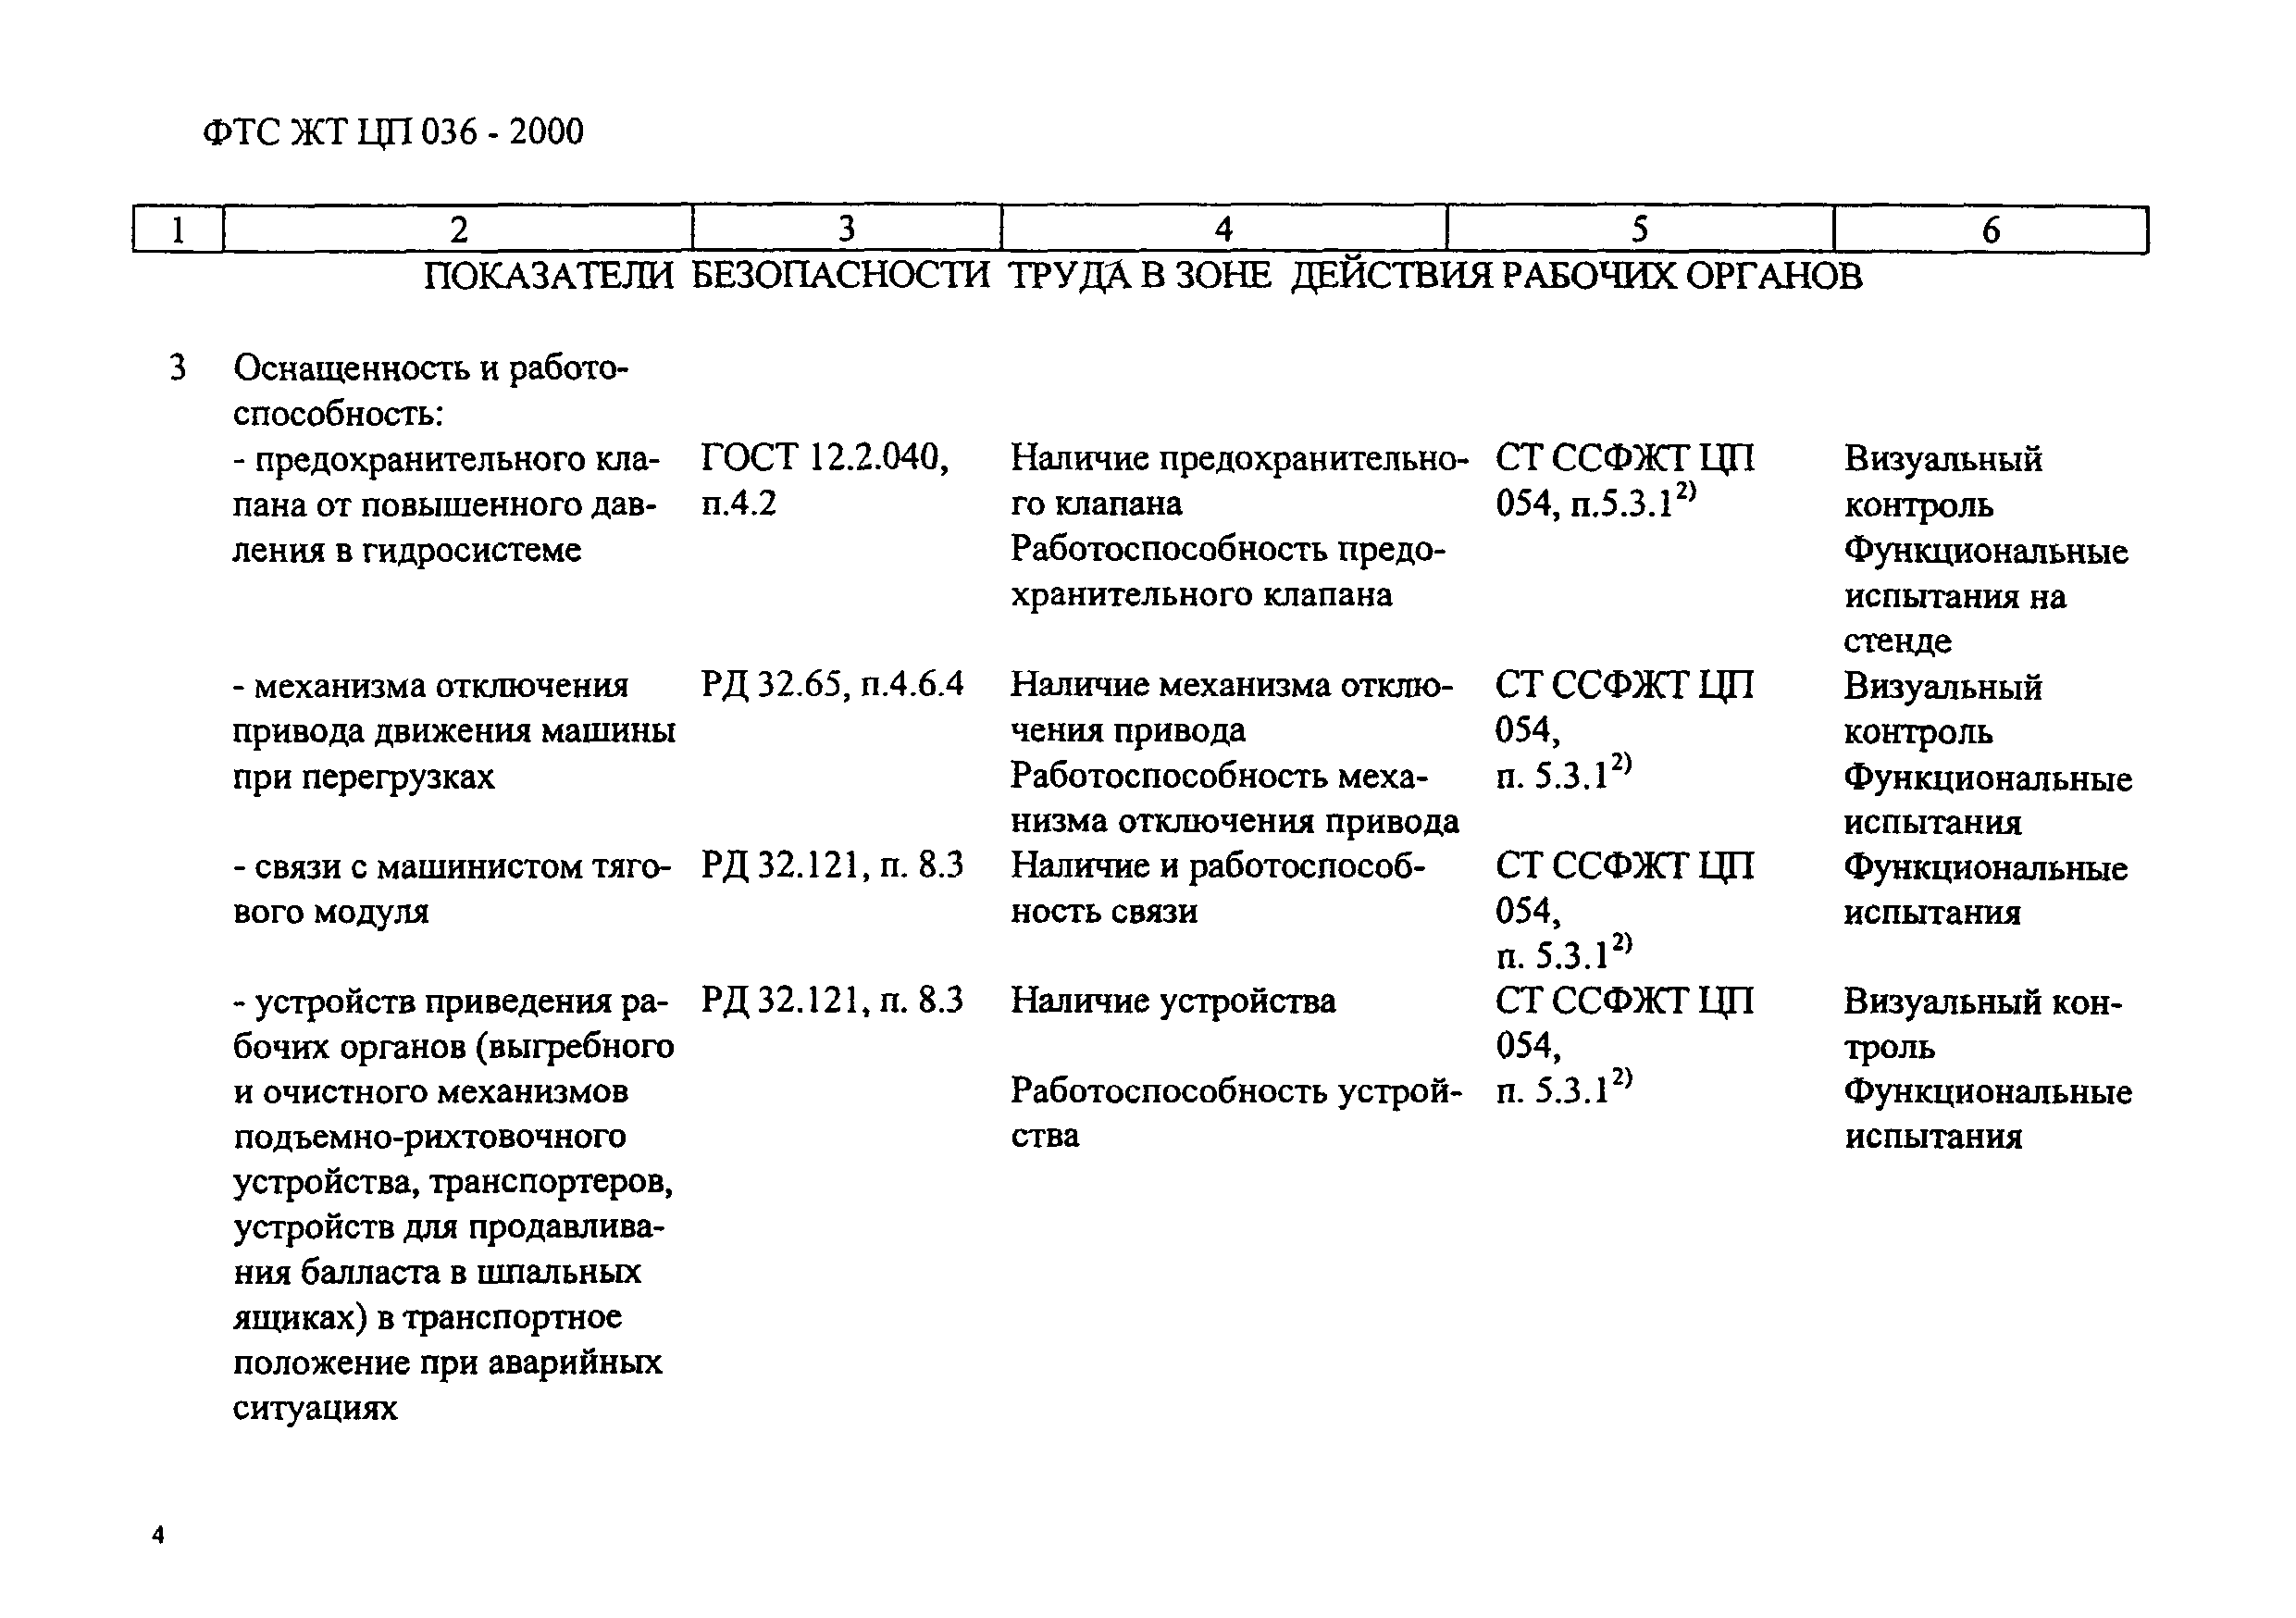 ФТС ЖТ ЦП 036-2000